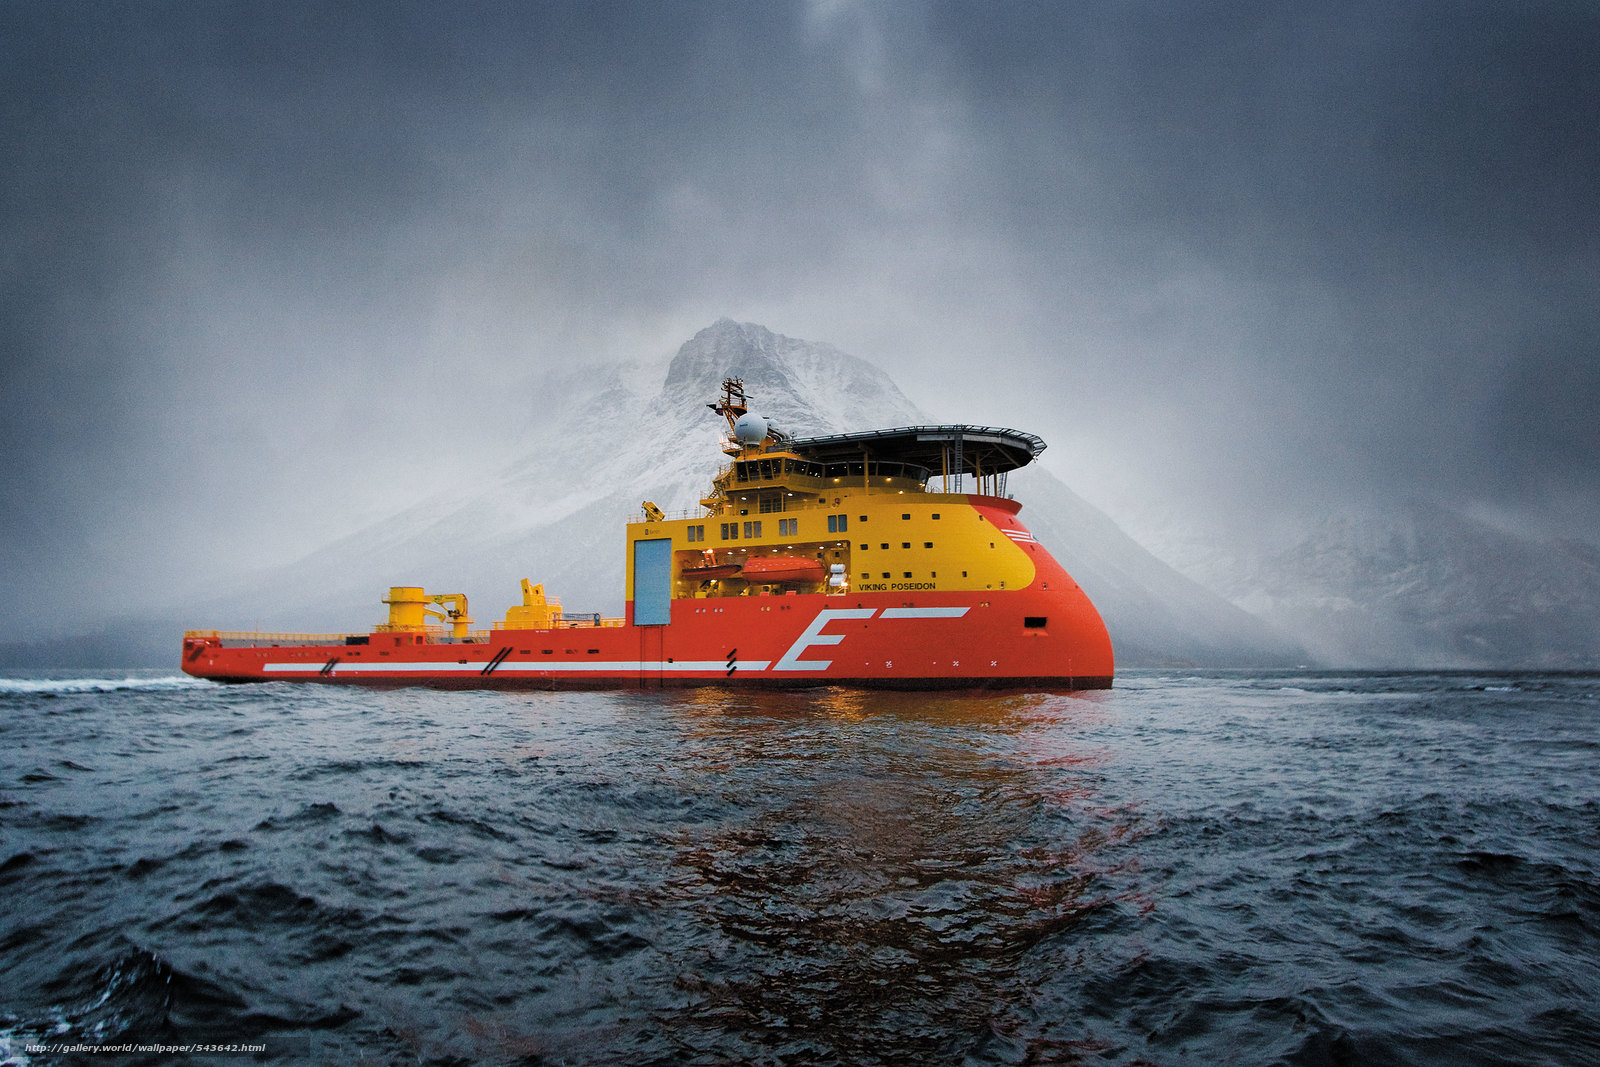 Download wallpaper Viking Posidion replenishment ship offshore Blue